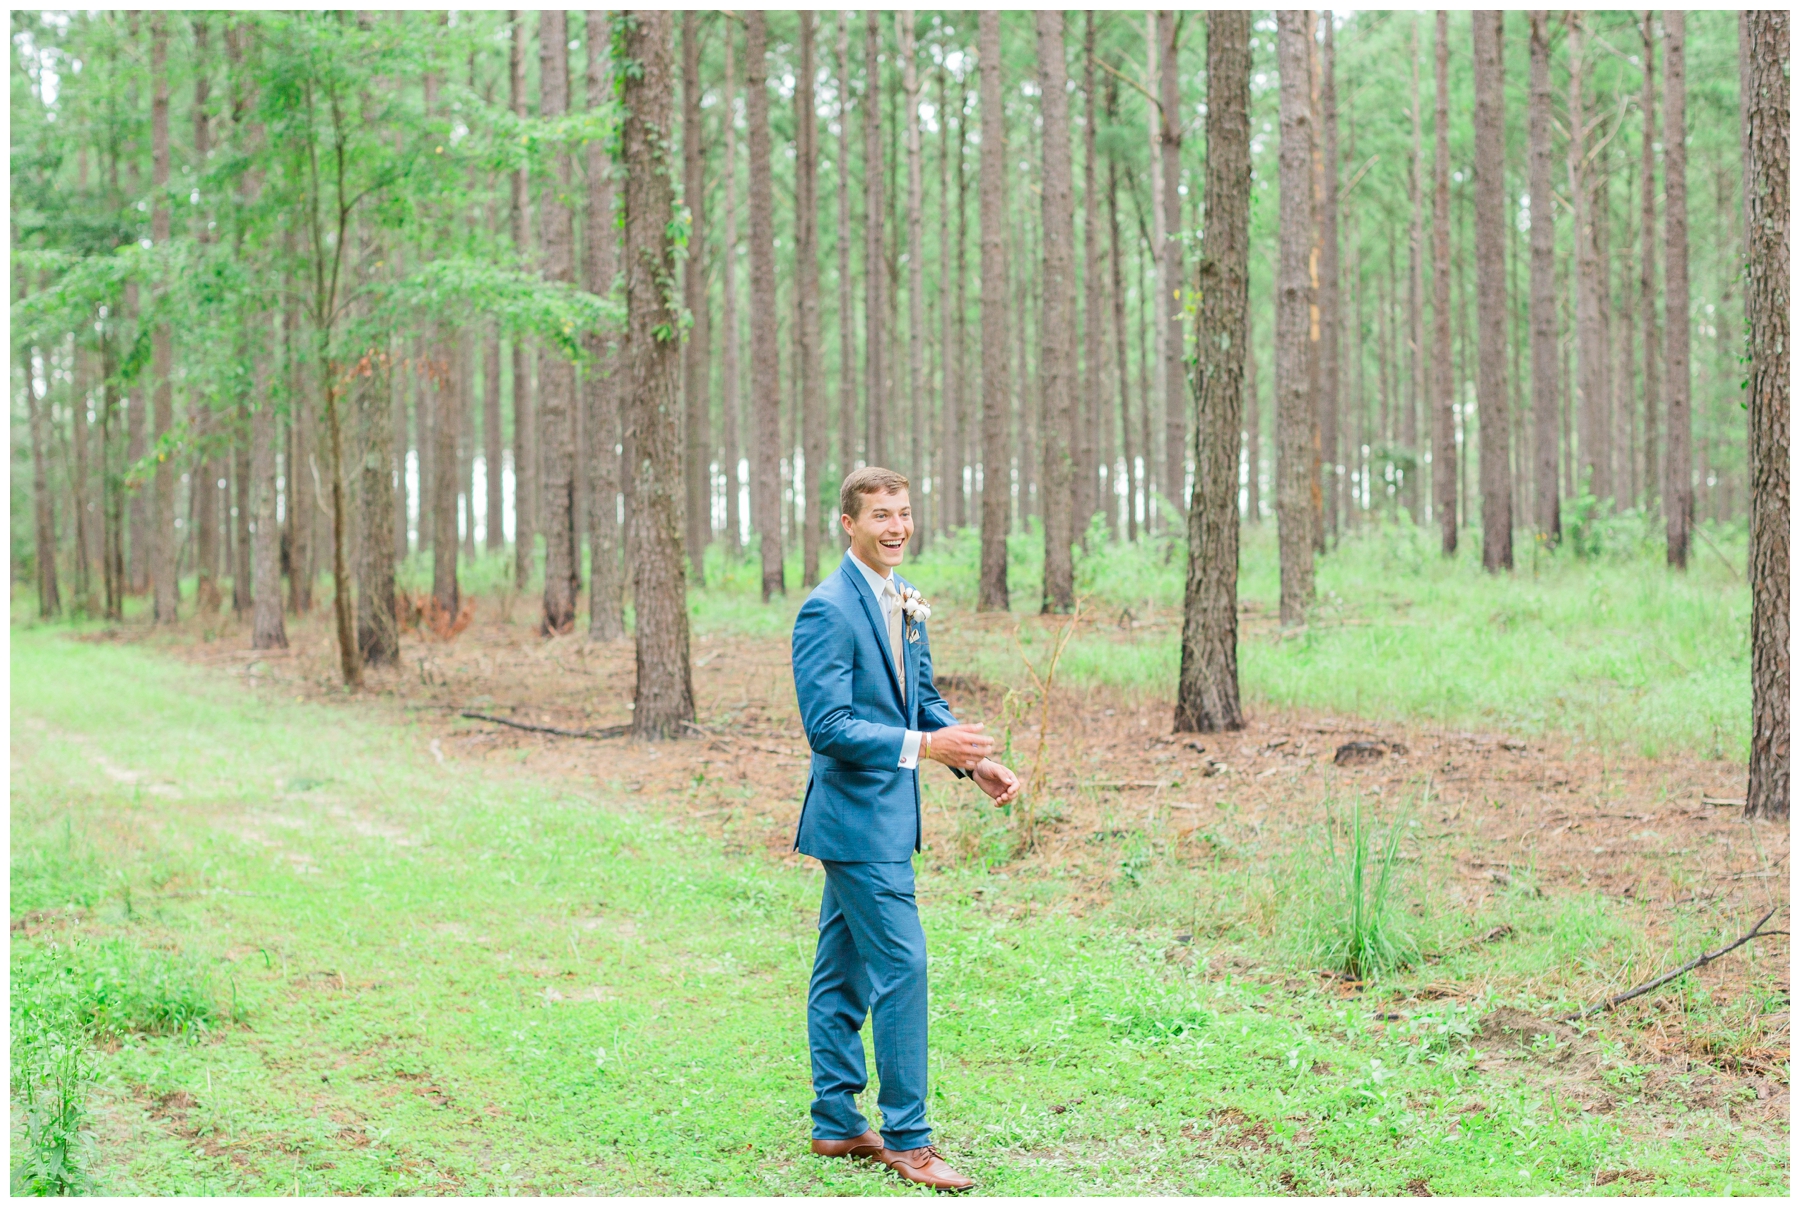 Atlanta_Georgia_Wedding_Photographer_First Look_Groom Reaction